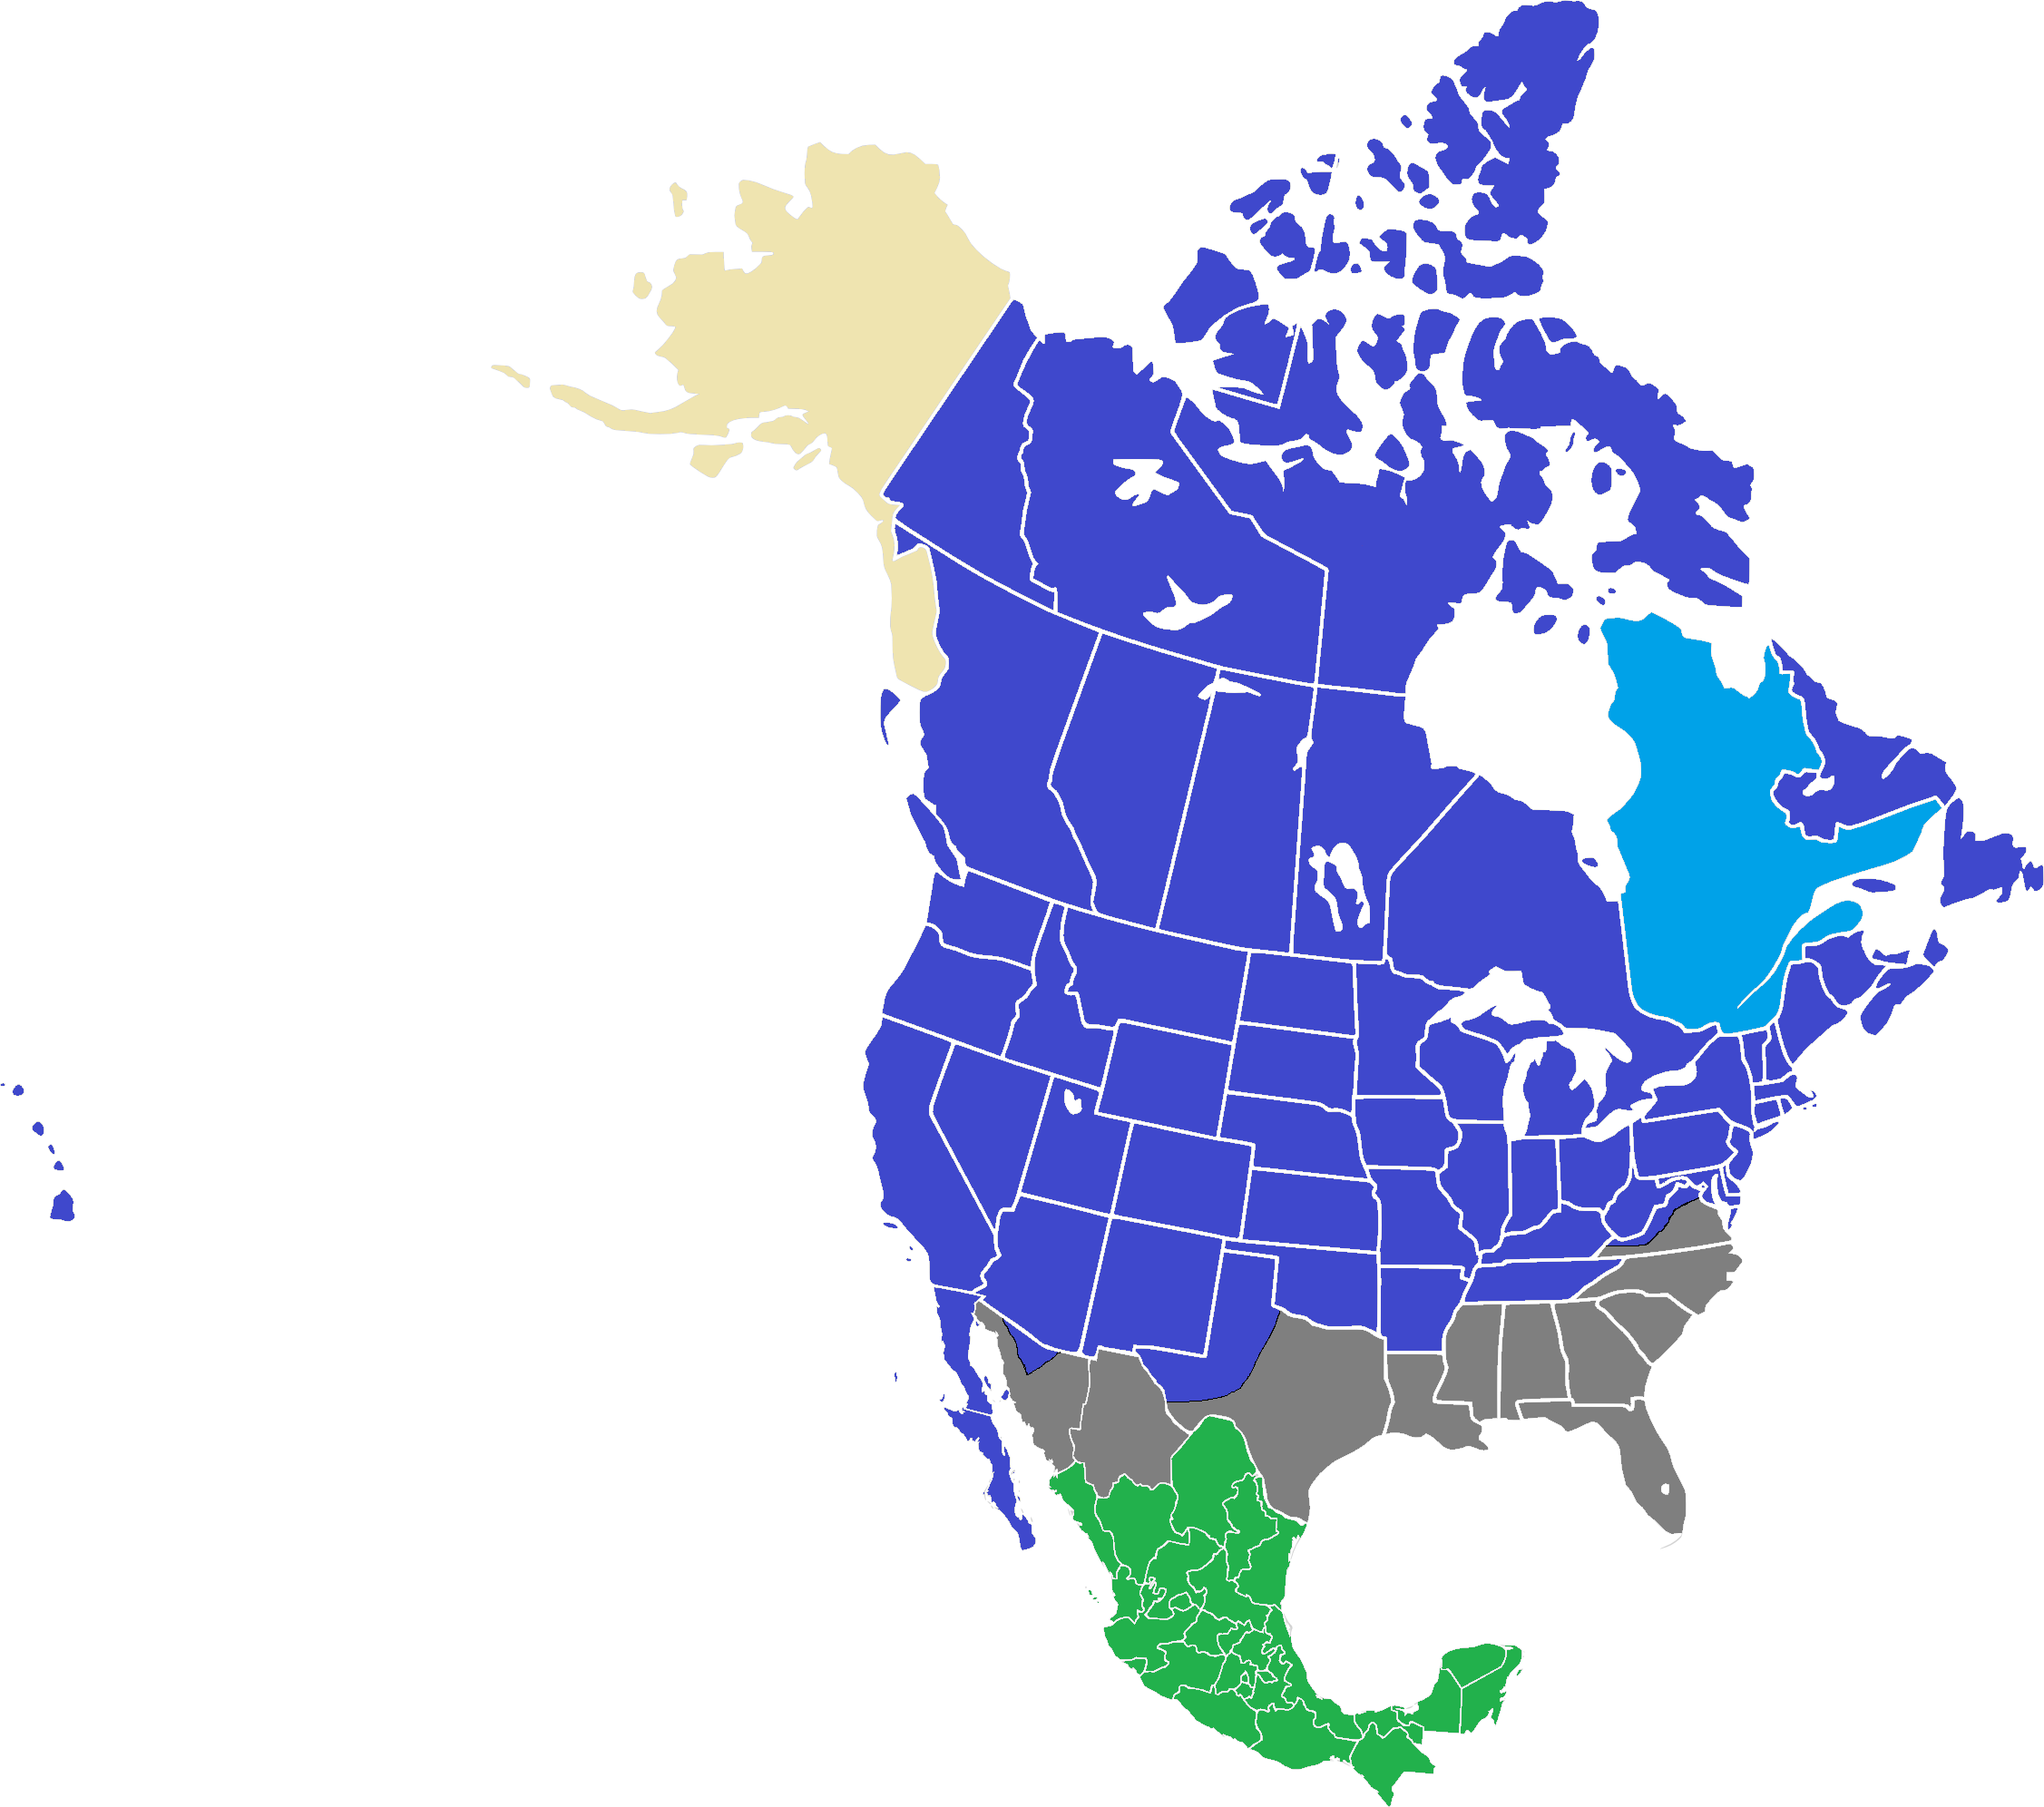 North_america_blank_range_map - Copy.png